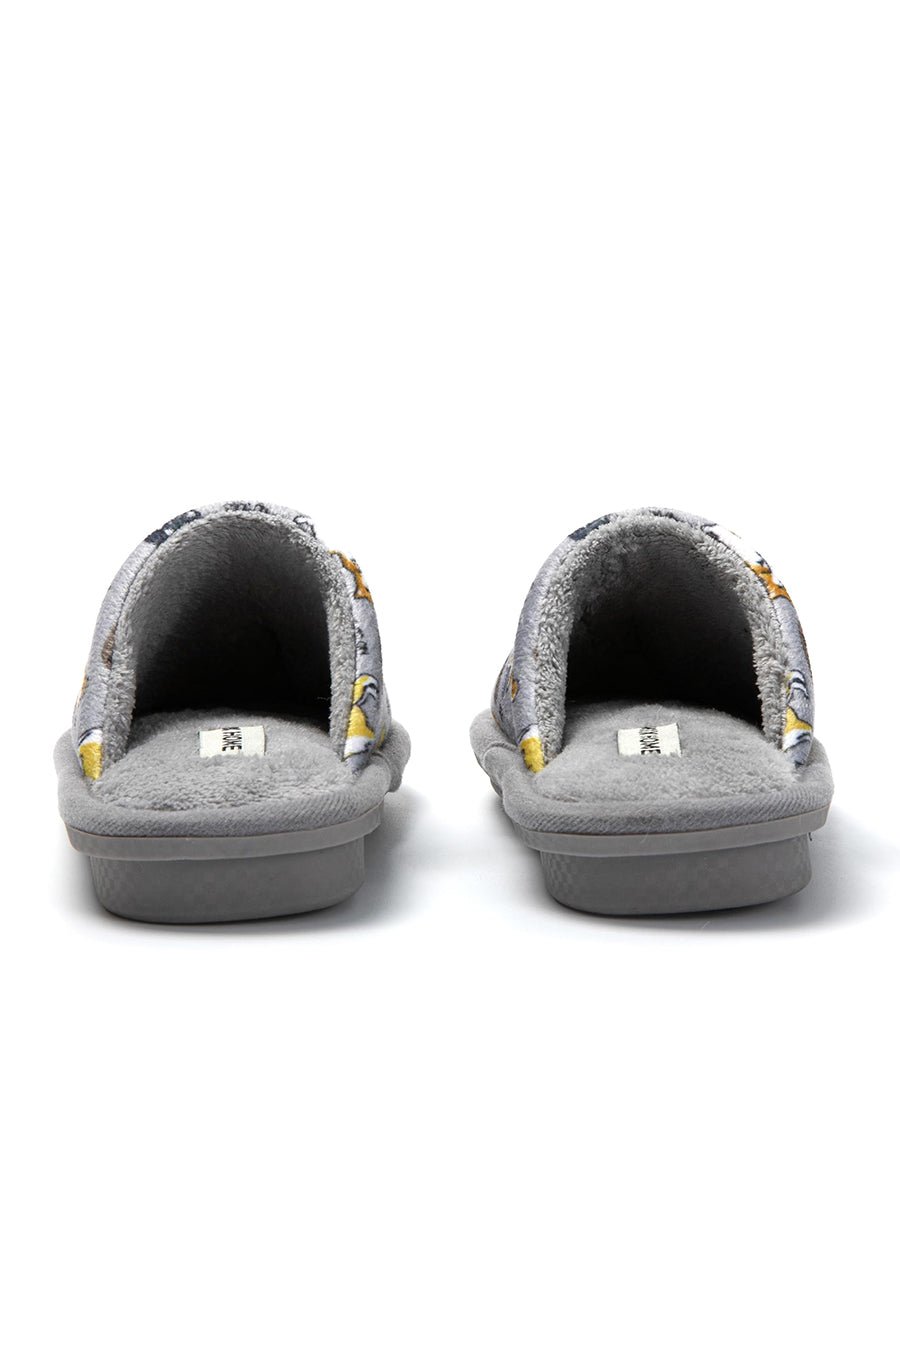 JOMIX Pantofole Bambine Invernali Ciabatte Calde da Casa per Ragazze MB8619